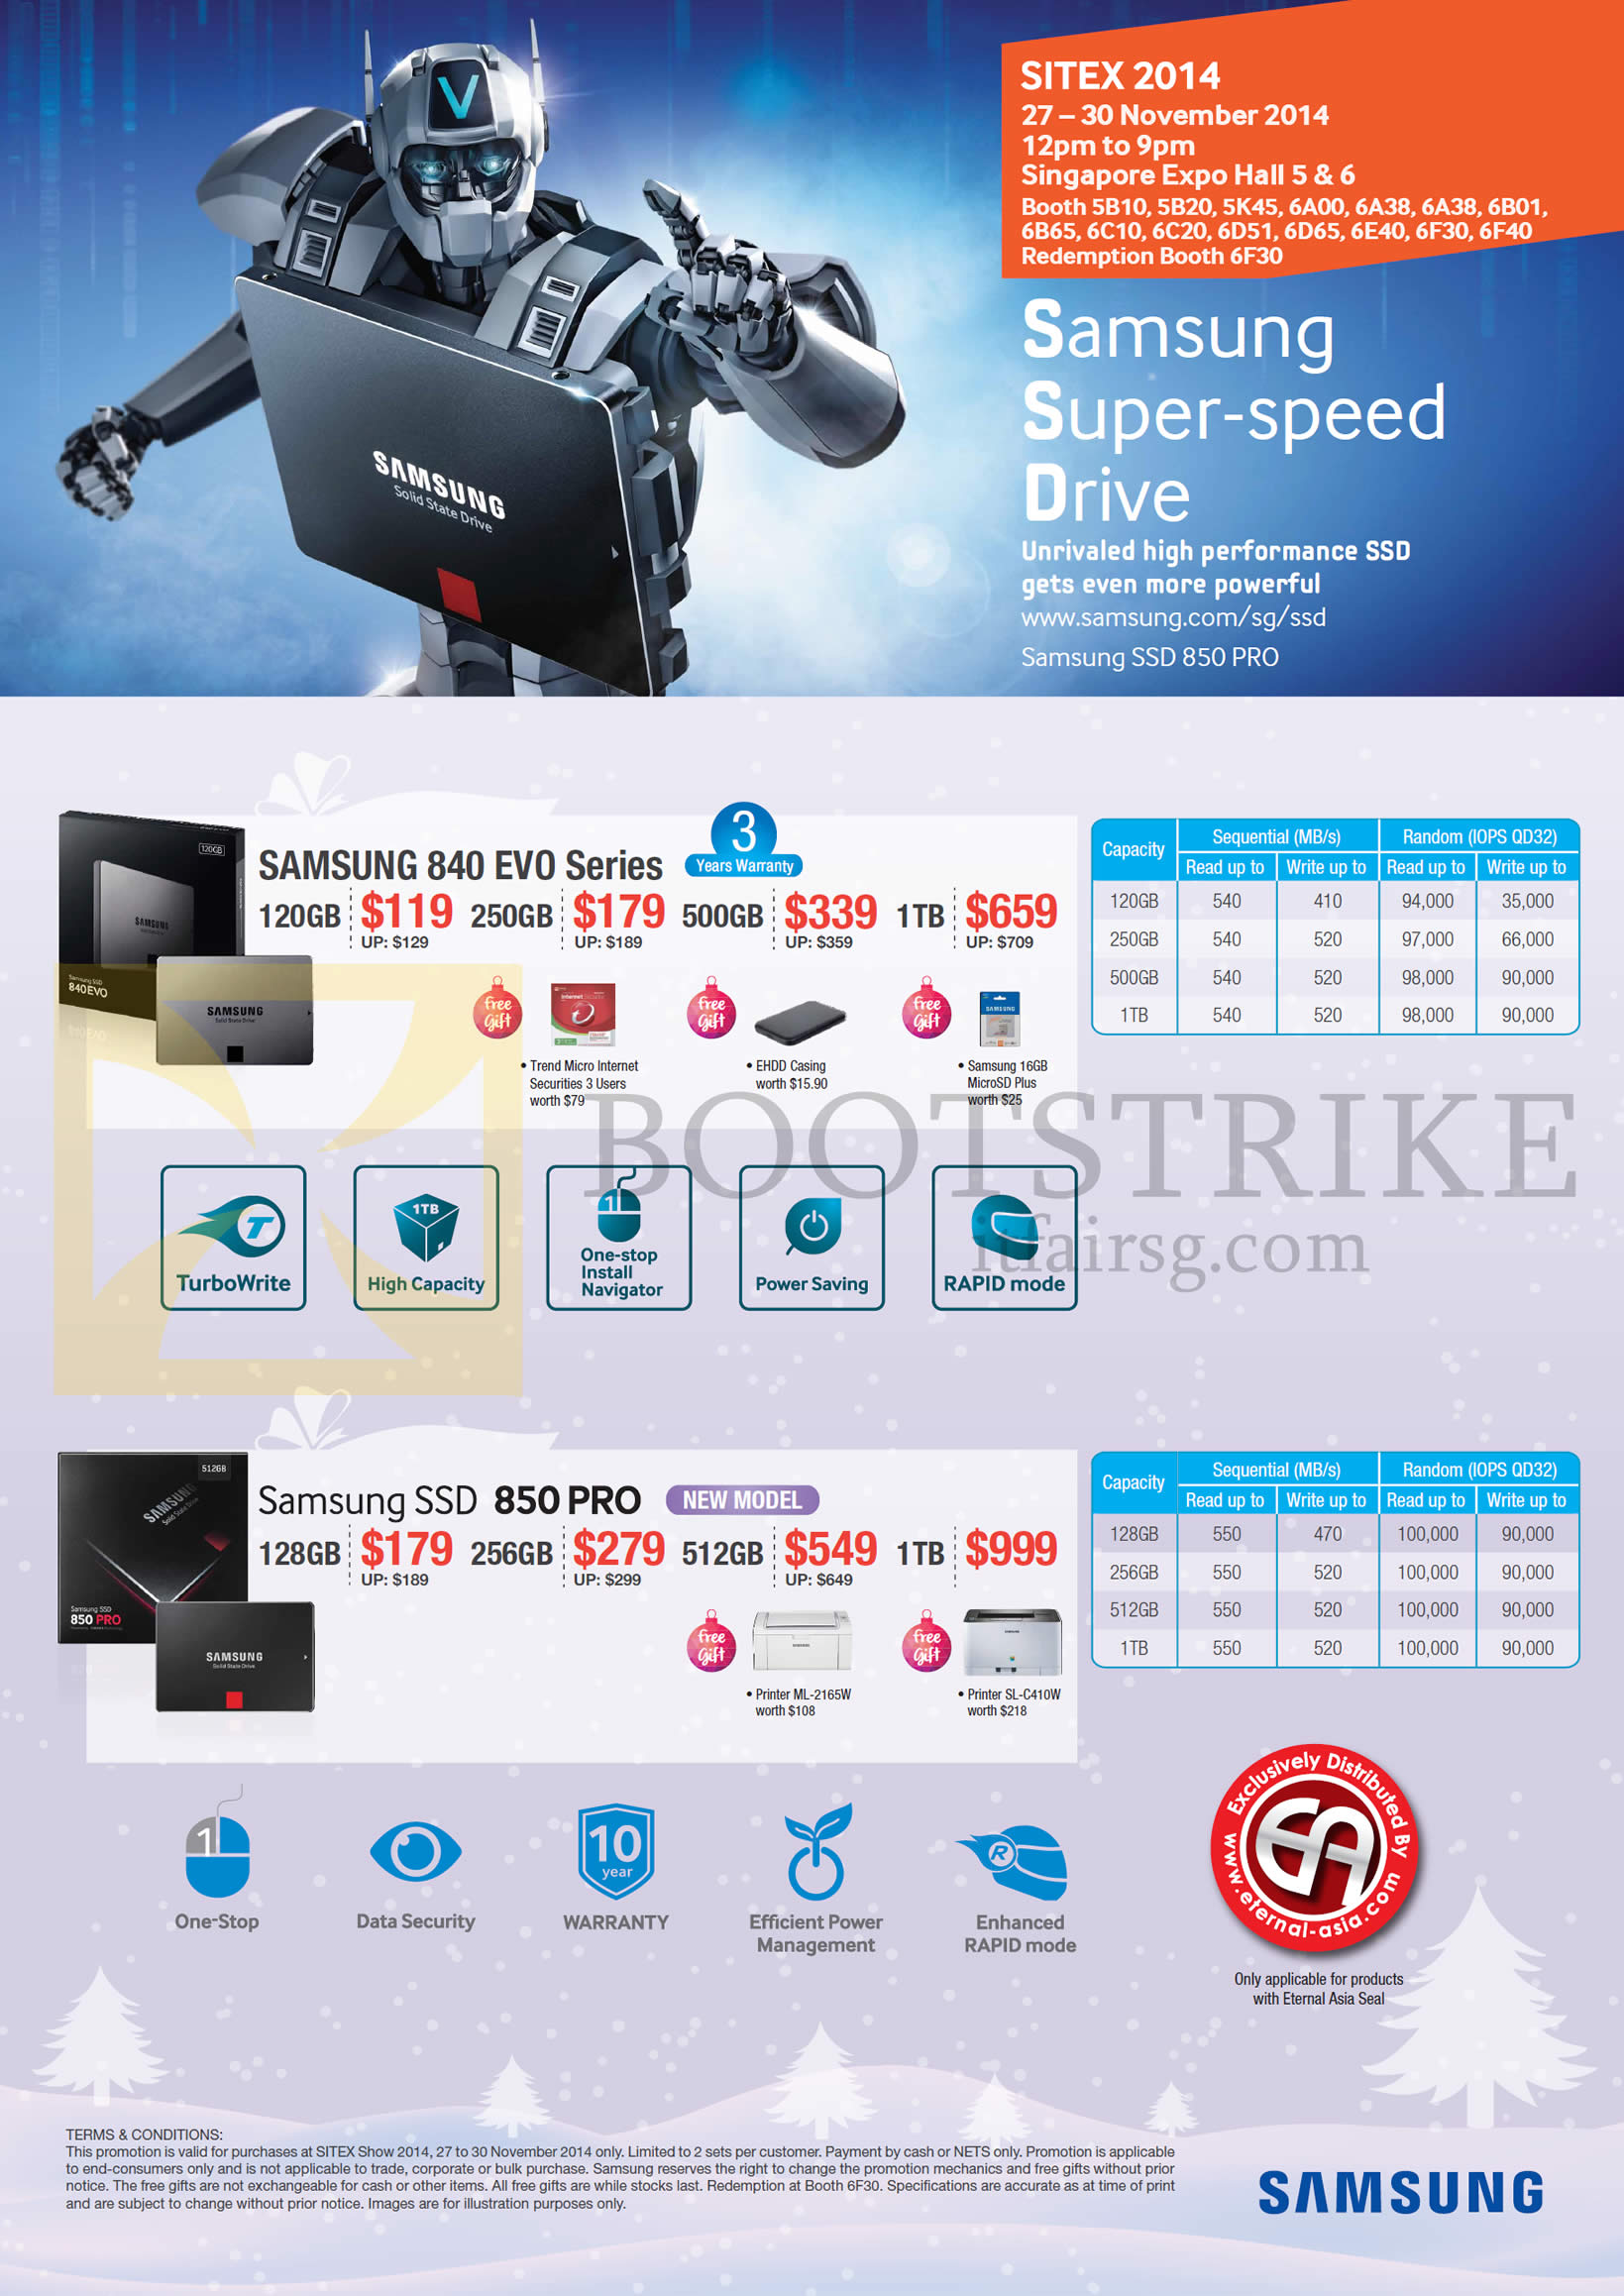 SITEX 2014 price list image brochure of Samsung SSD Super Speed Drives 840 Evo Series, 850 Pro